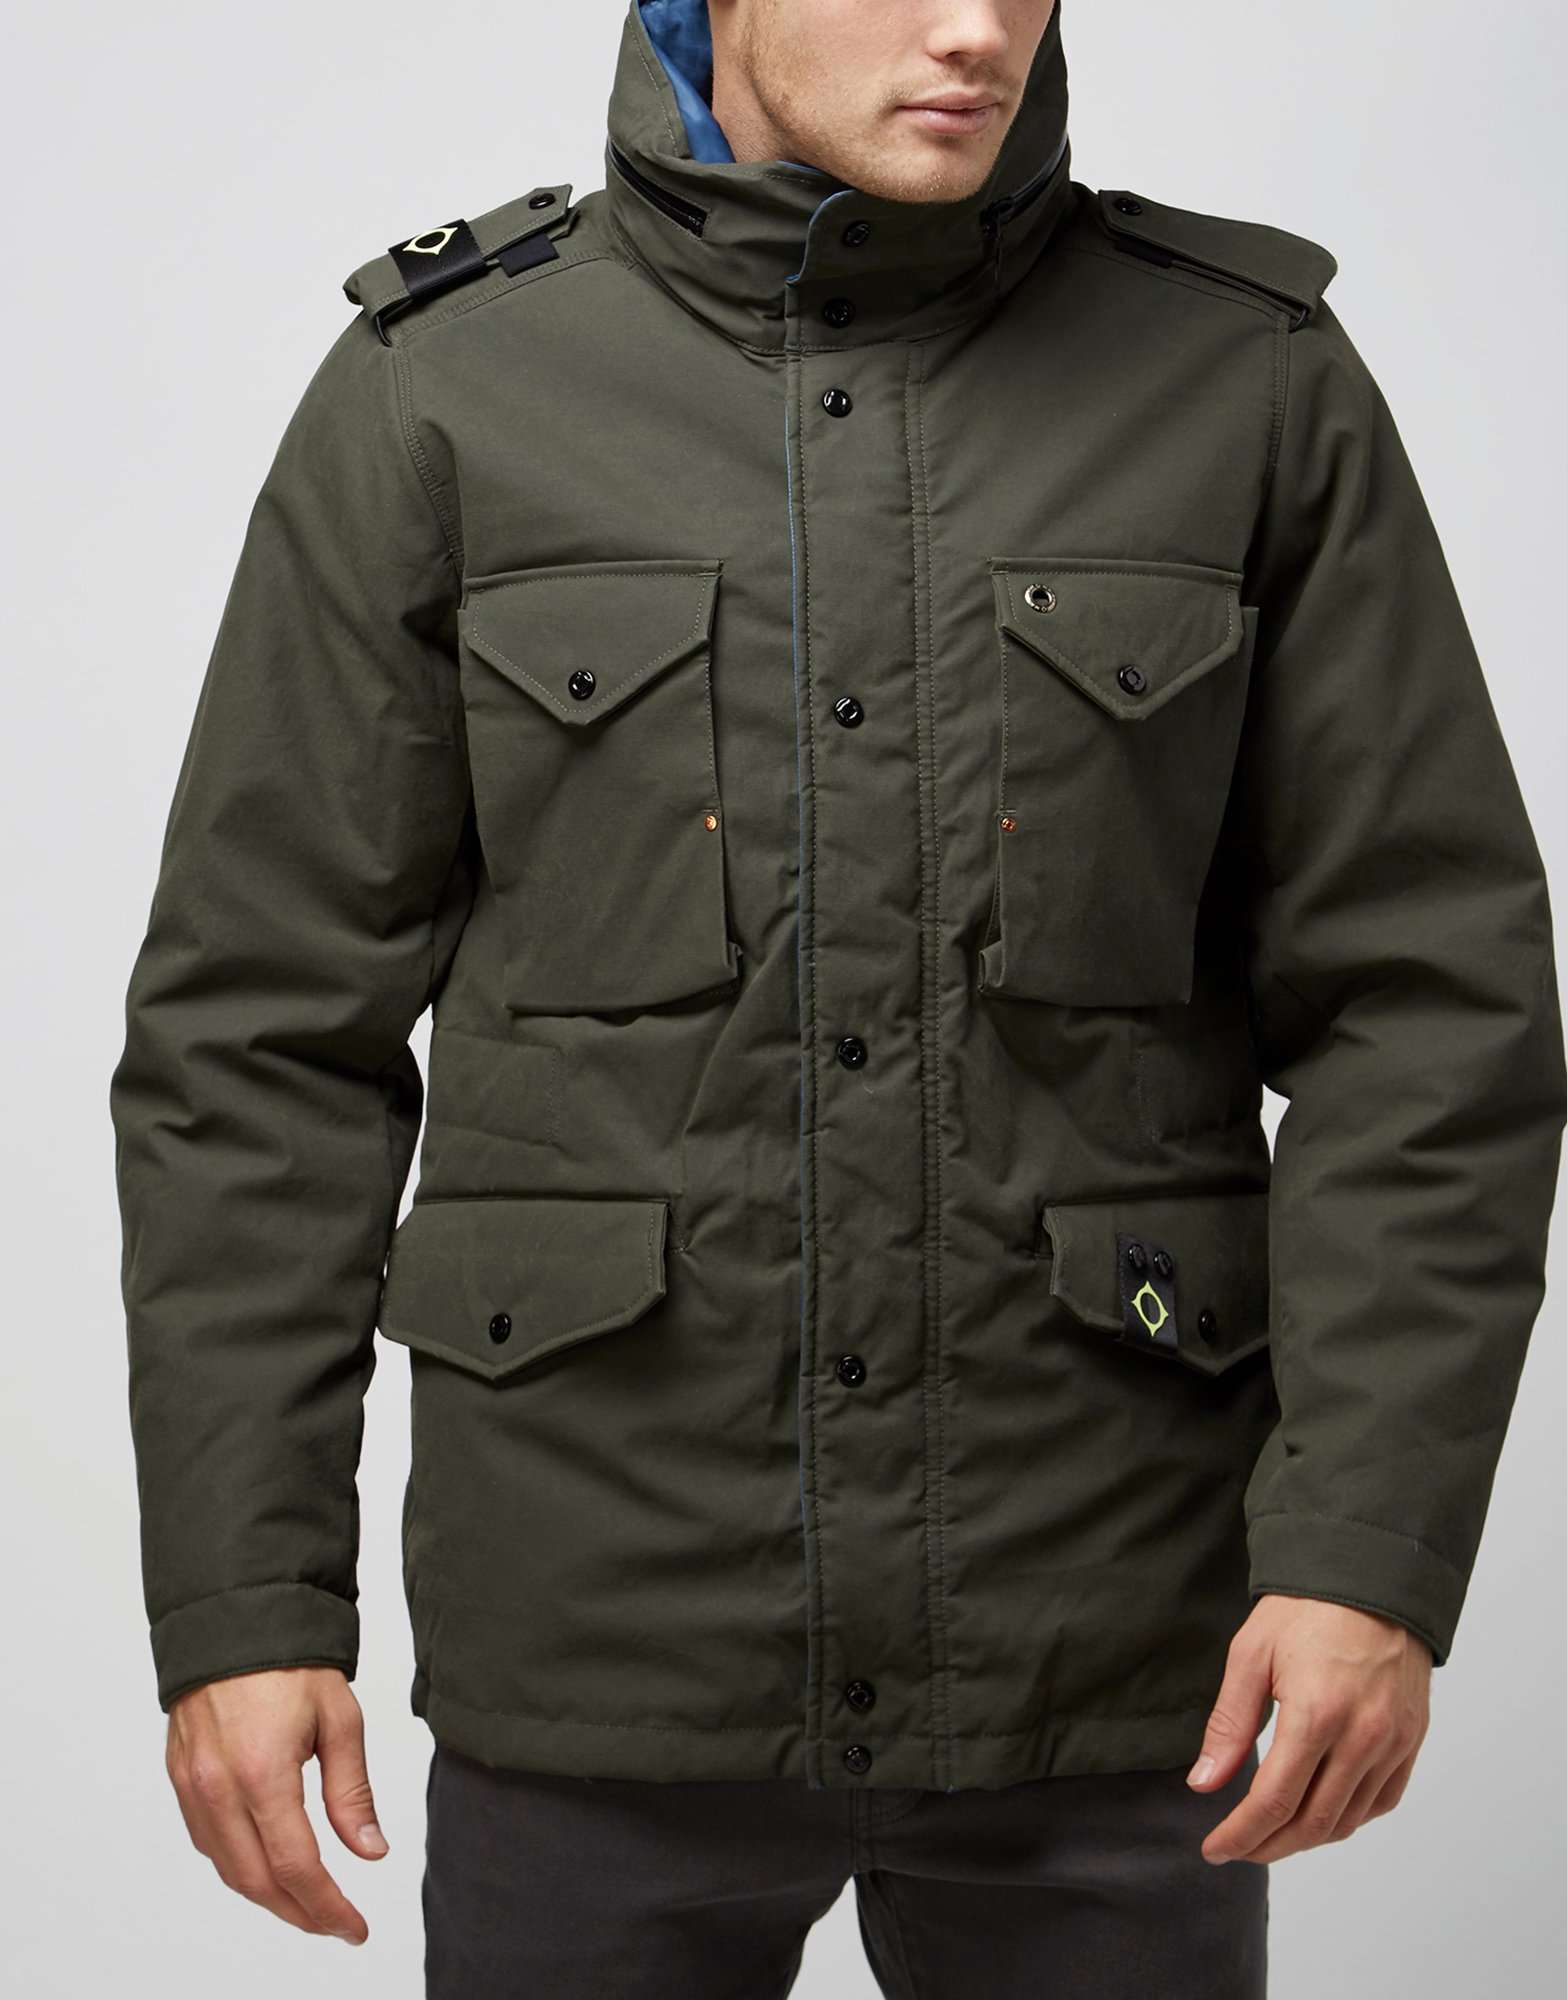 MA STRUM Reversible Jacket | scotts Menswear